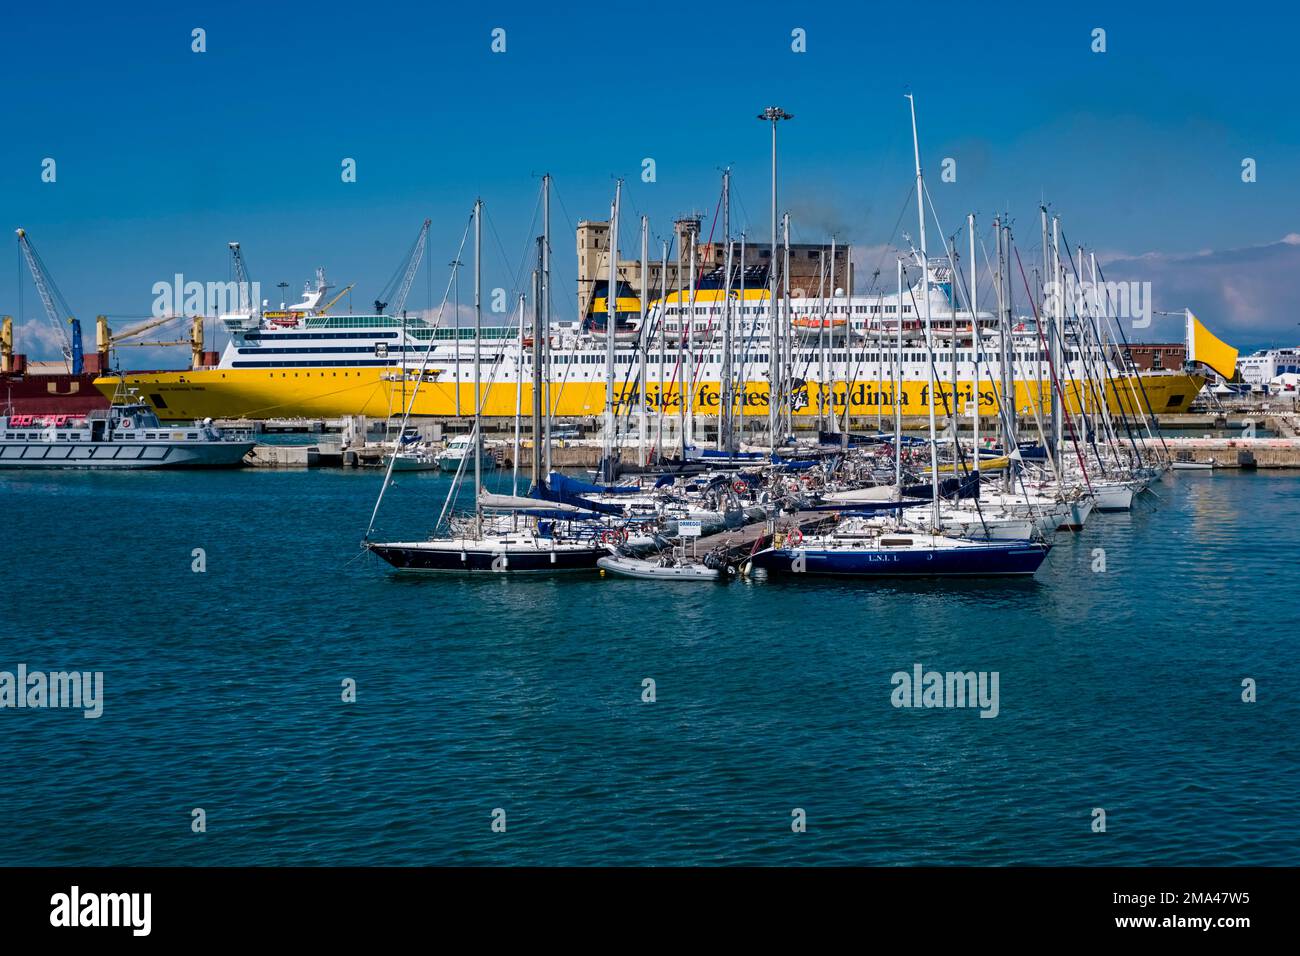 The Corsica Victoria, a Corsica Ferries ferry, is anchored in the Darsena part of the Port of Livorno, Porto di Livorno, surrounded by sailboats. Stock Photo